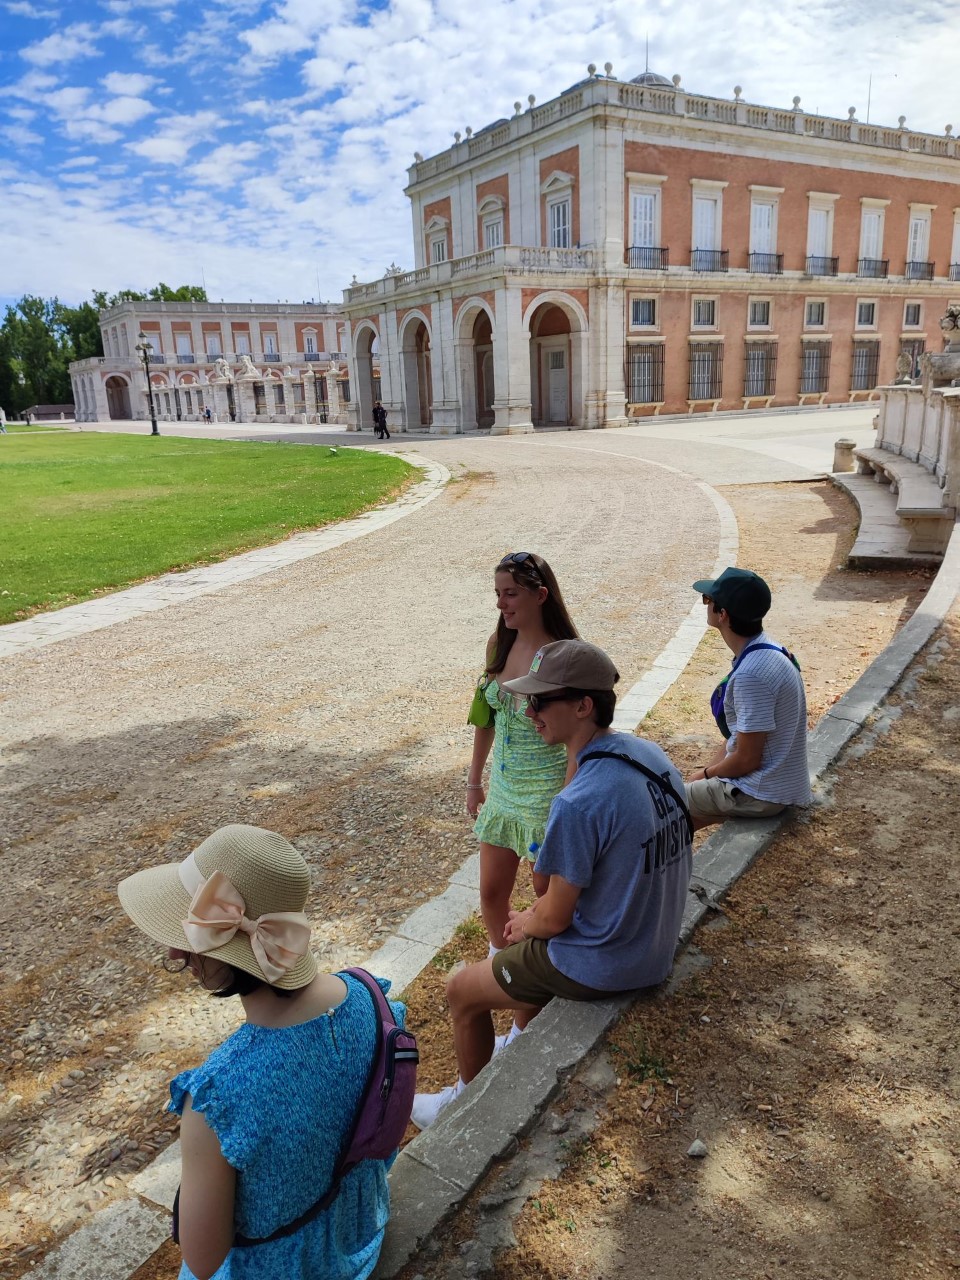 Students exploring the sites of Aranjuez, Spain.